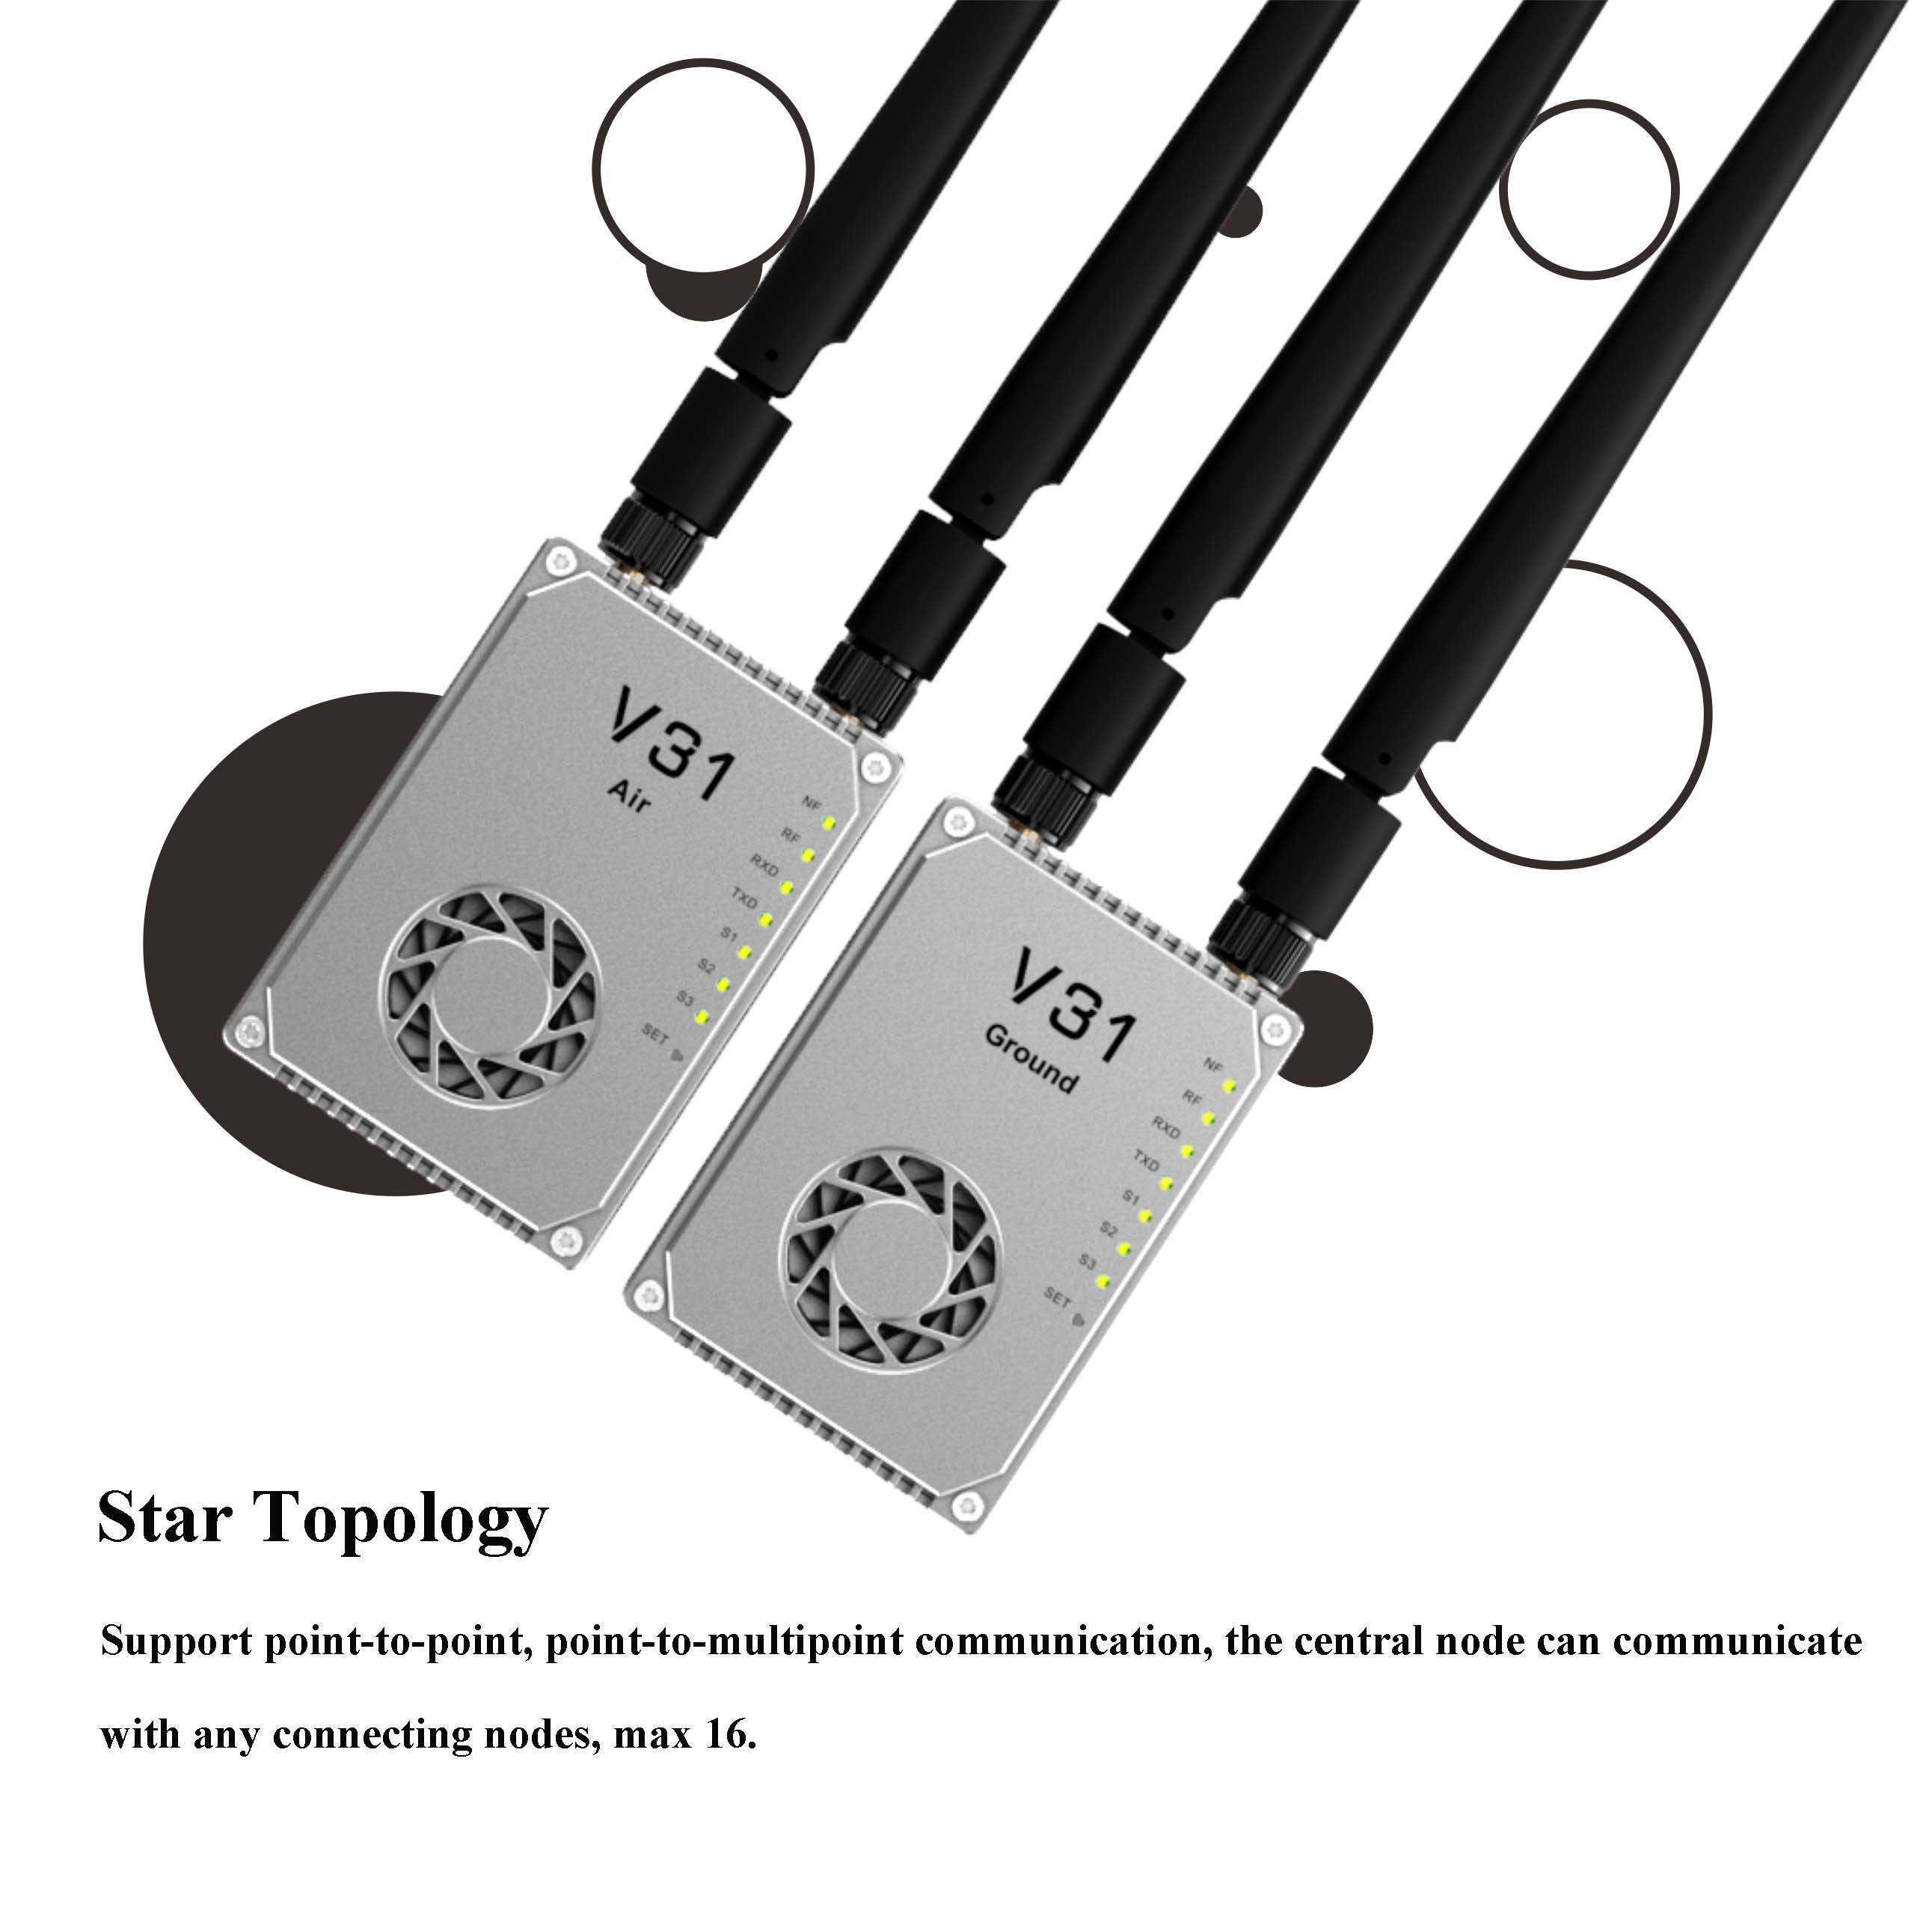 V31 Plus Video & telemetry & RC link (30km grade)